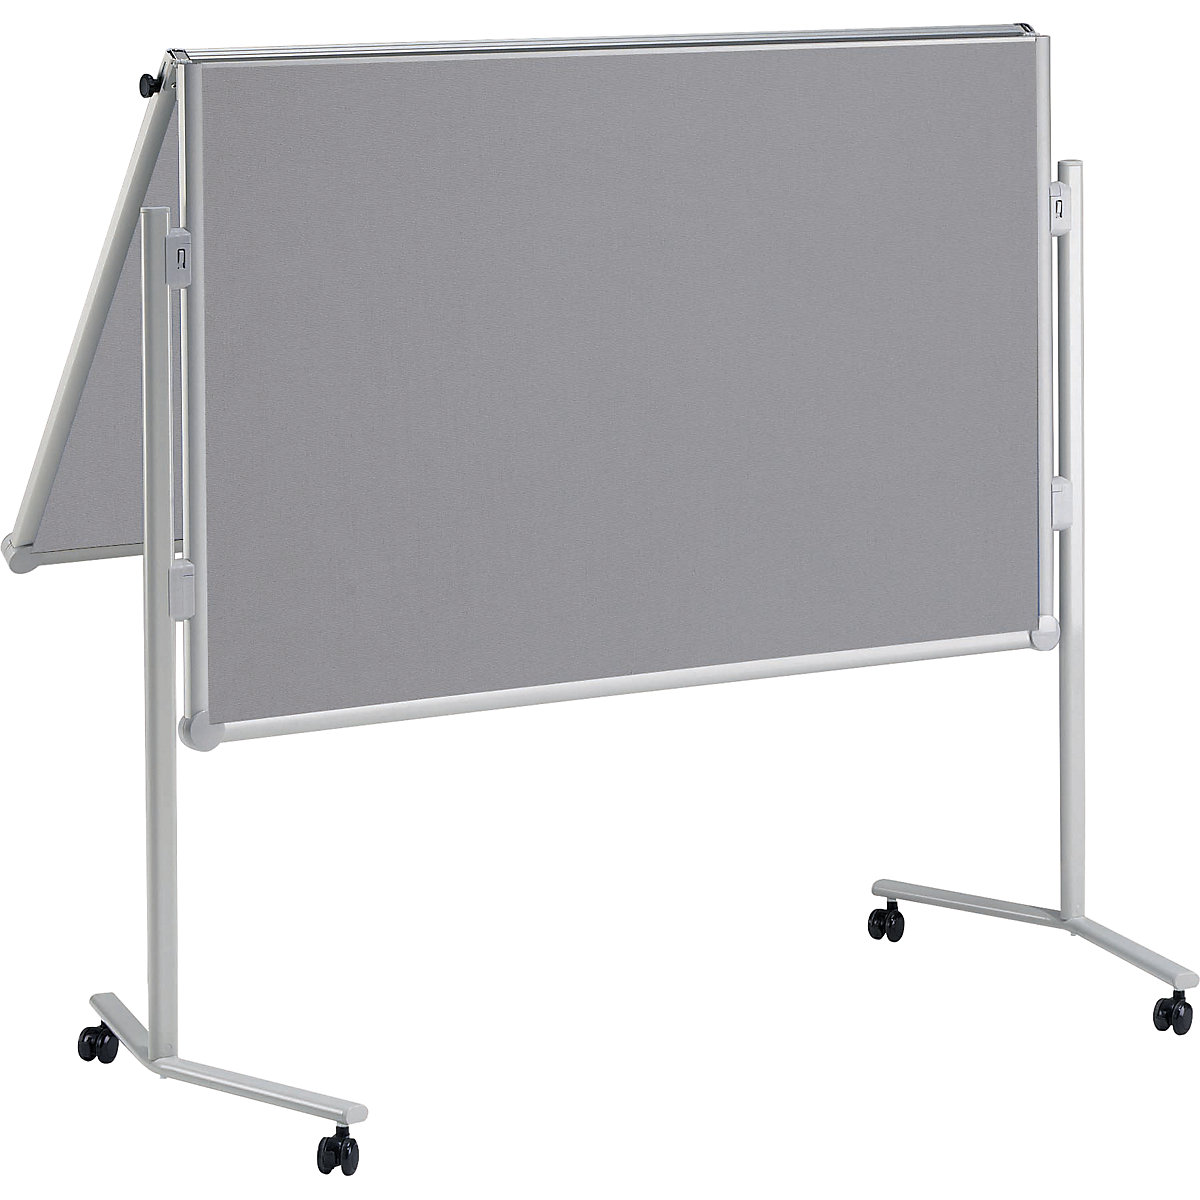 MAUL Moderationstafel, klappbar, Textil-Oberfläche, grau, BxH 1200 x 1500 mm